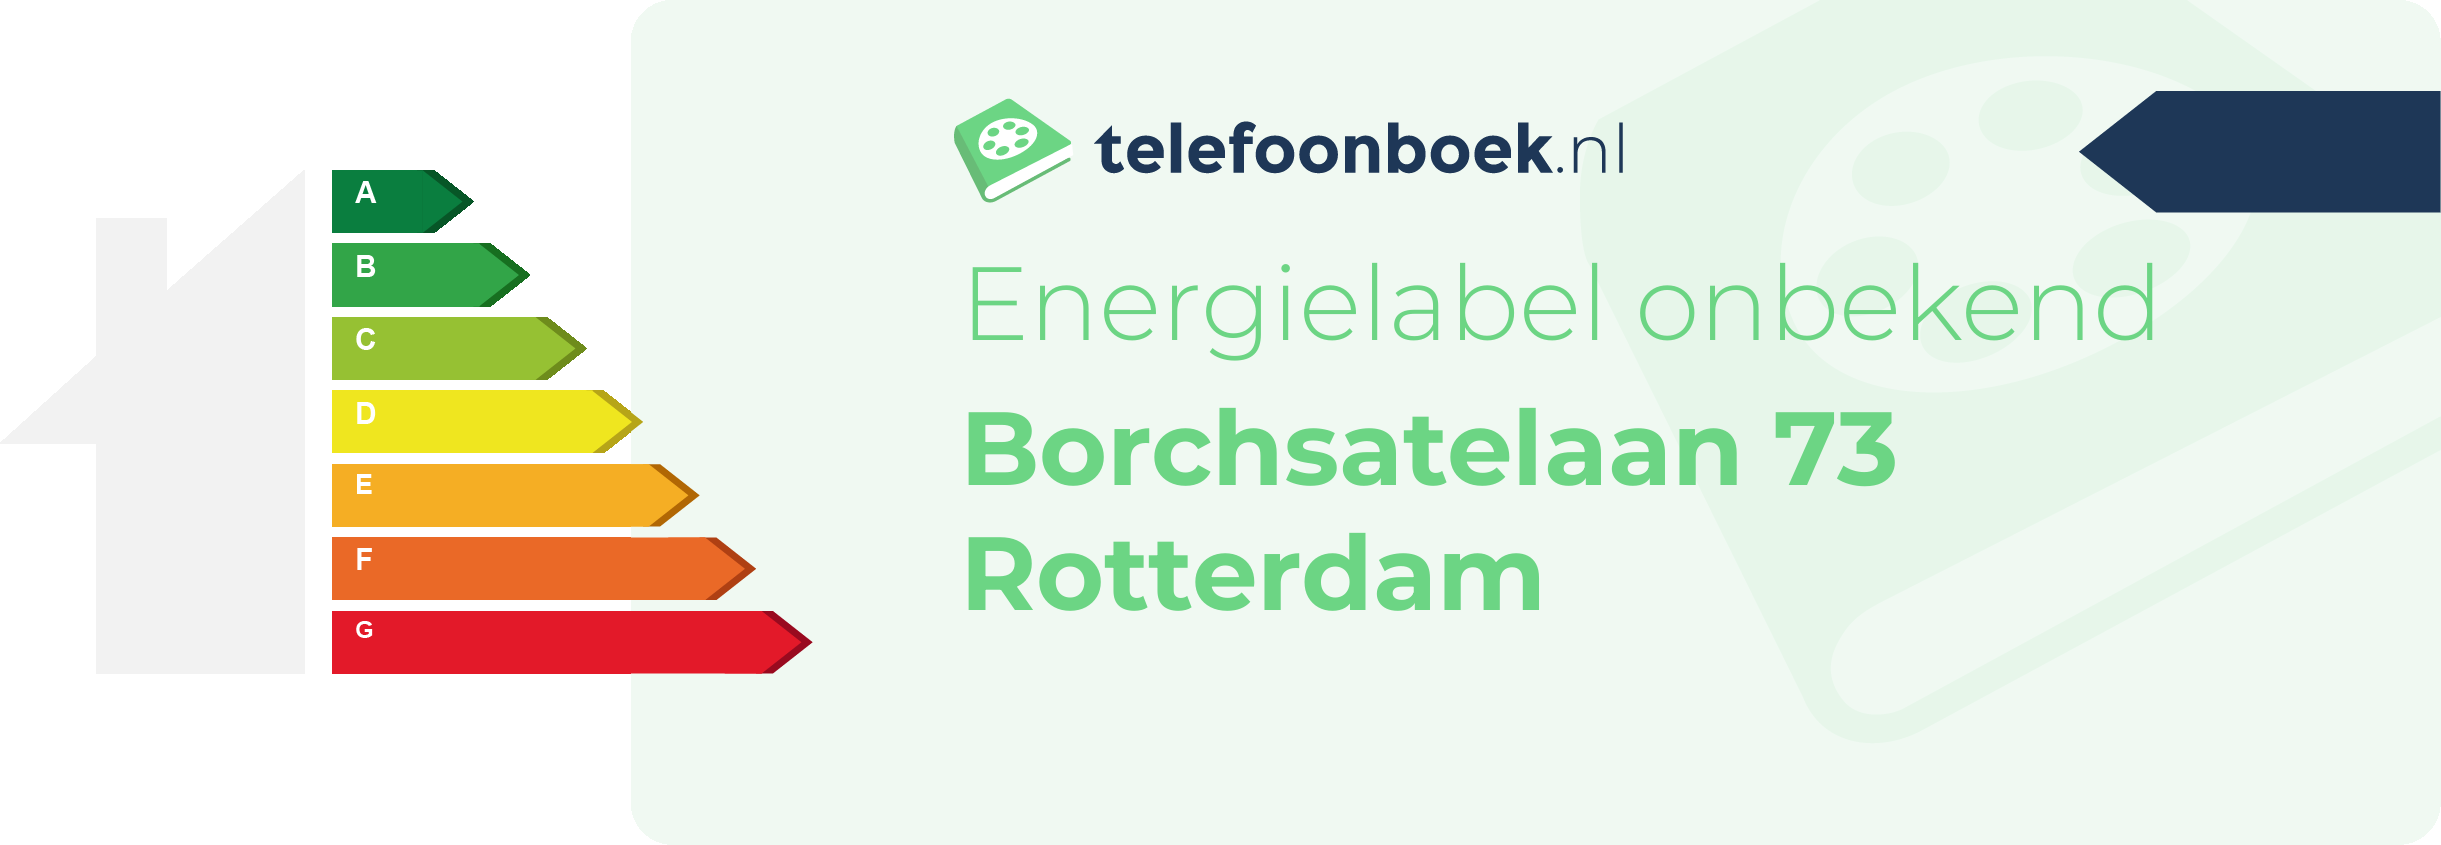 Energielabel Borchsatelaan 73 Rotterdam